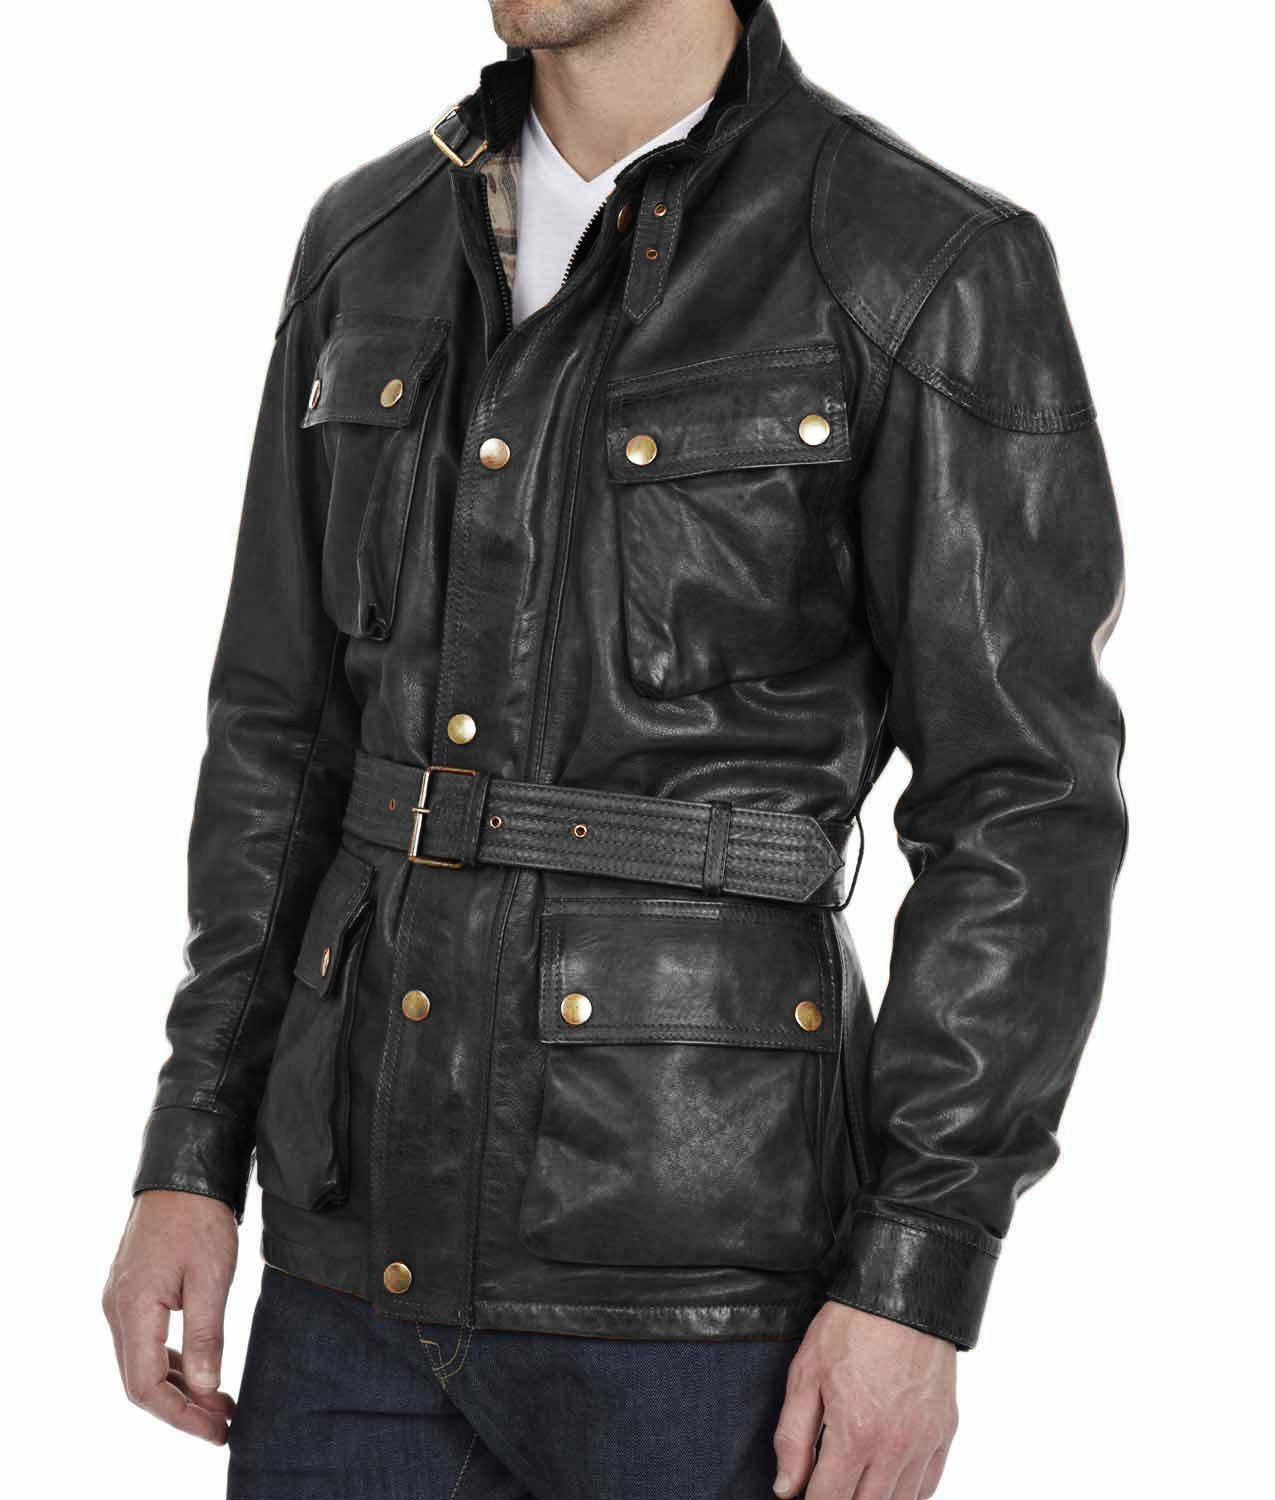 Spine Spark Benjamin Brad Pitt Black Pure Leather Coat & Jacket